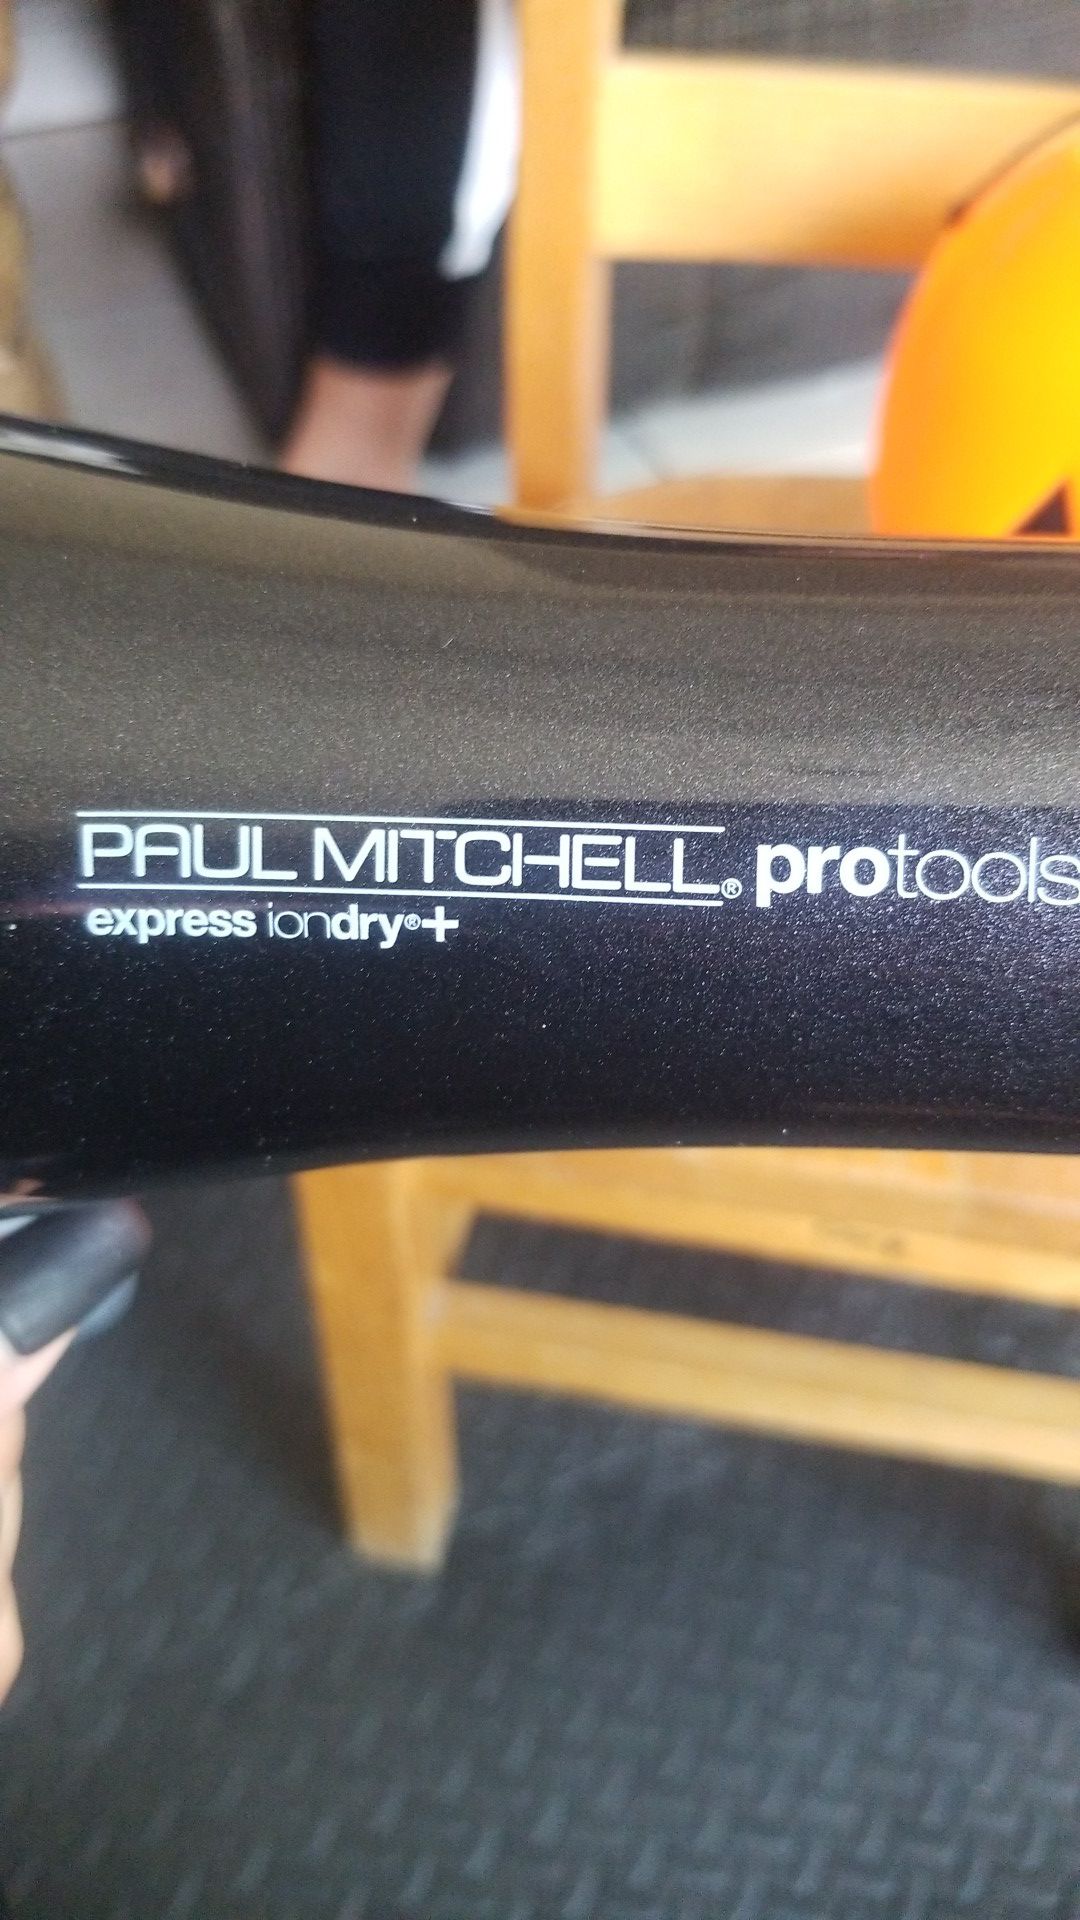 Paul Mitchell Protools blowdryer